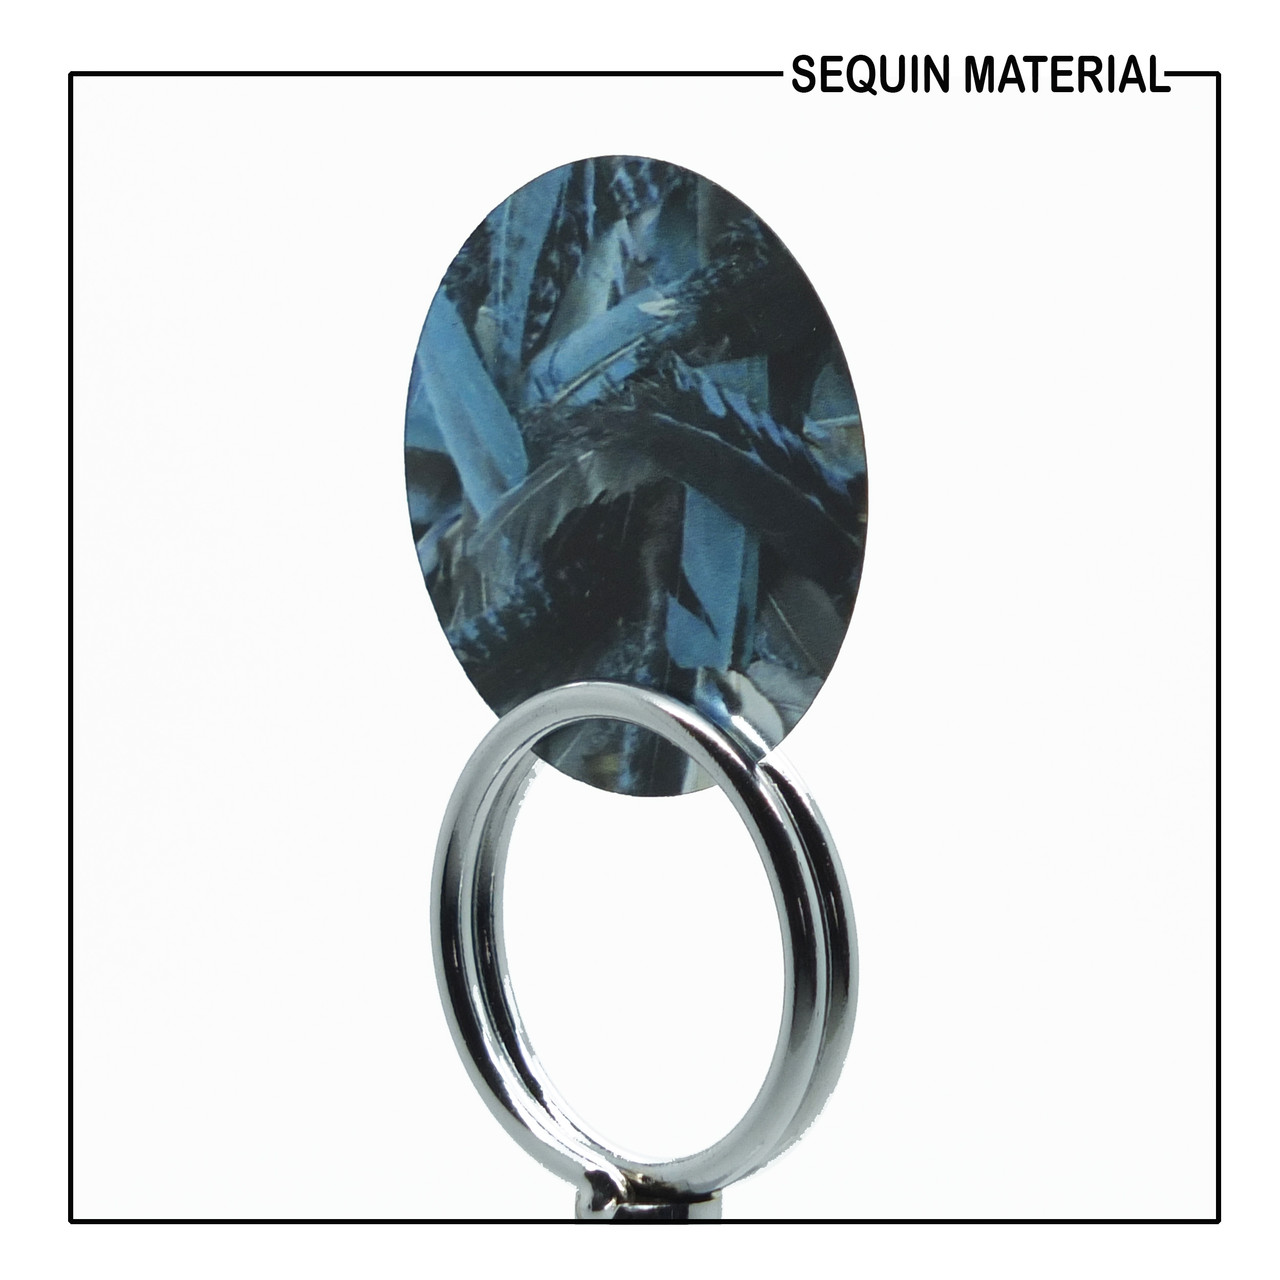 SequinsUSA Blue Silver Bird Feathers Metallic Print Sequin Material RL404